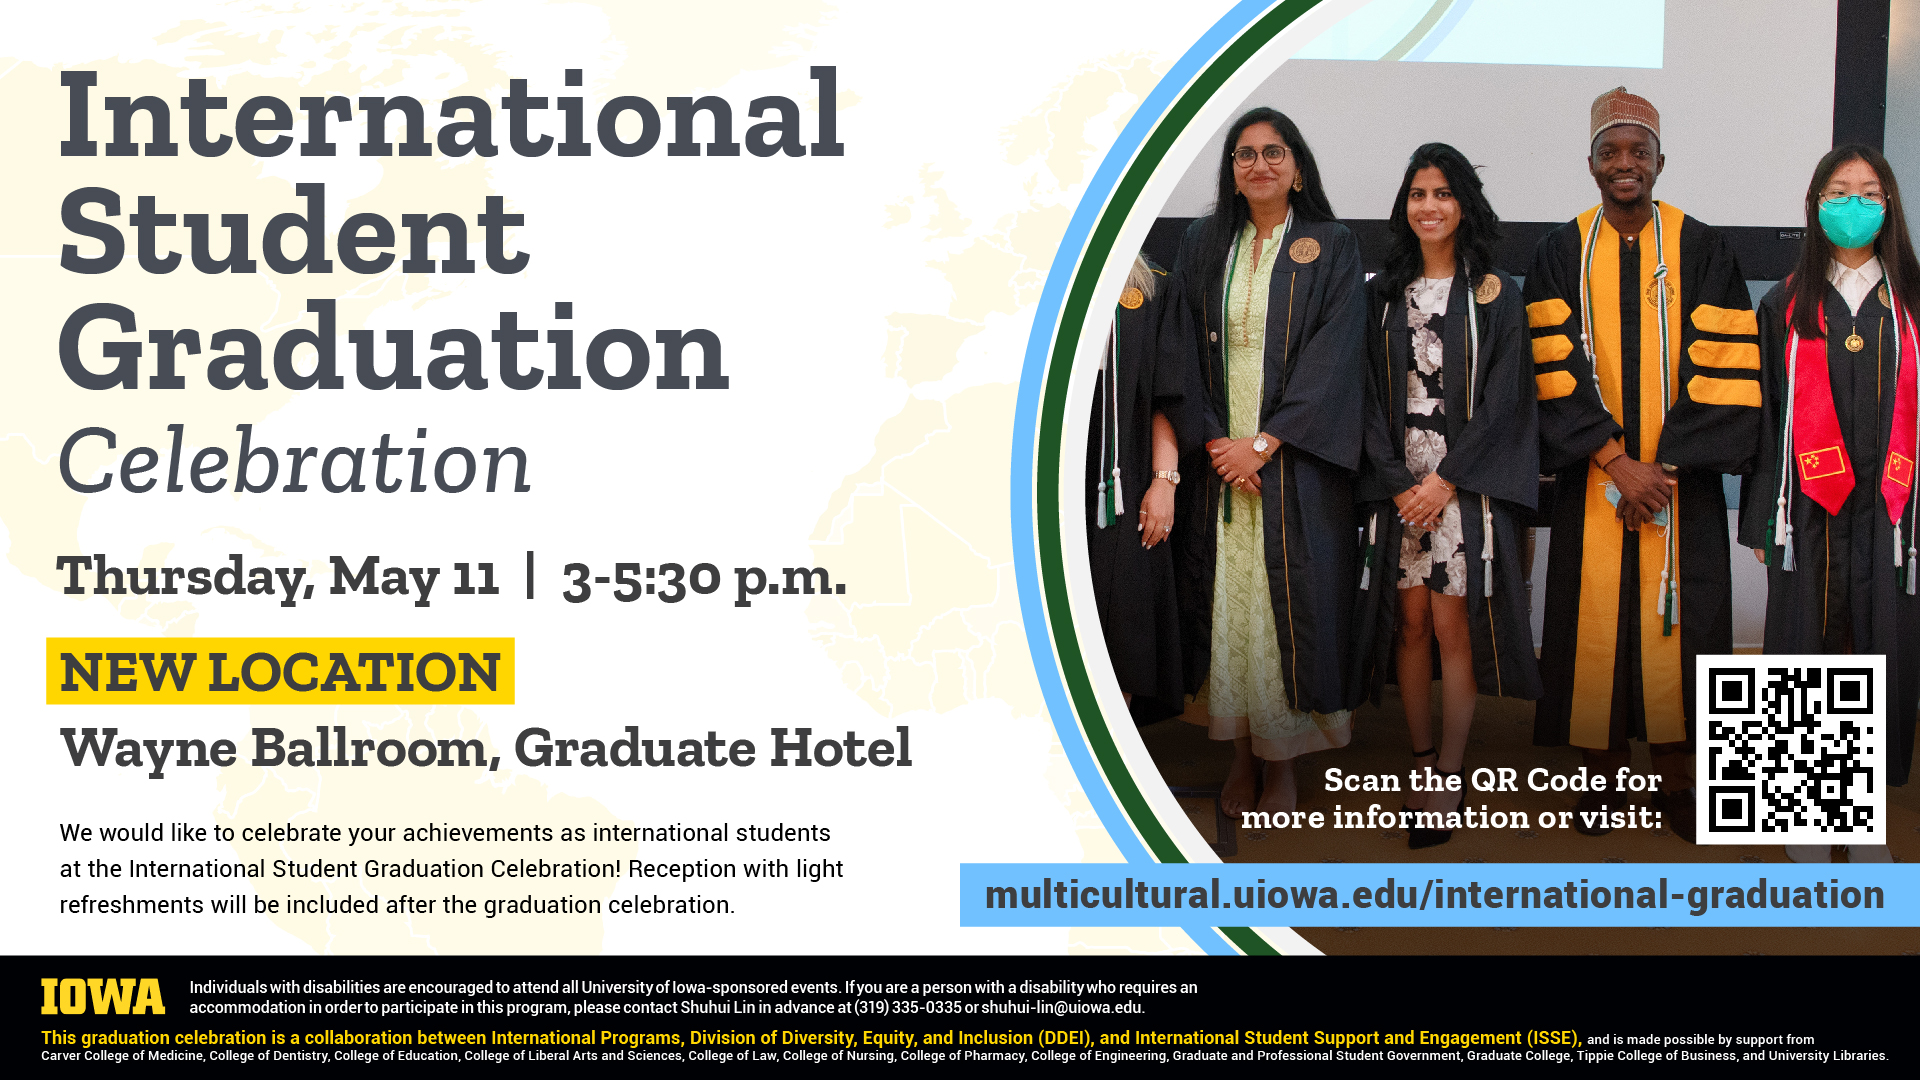 International Student Graduation Thursday, May 11 3-5:30pm